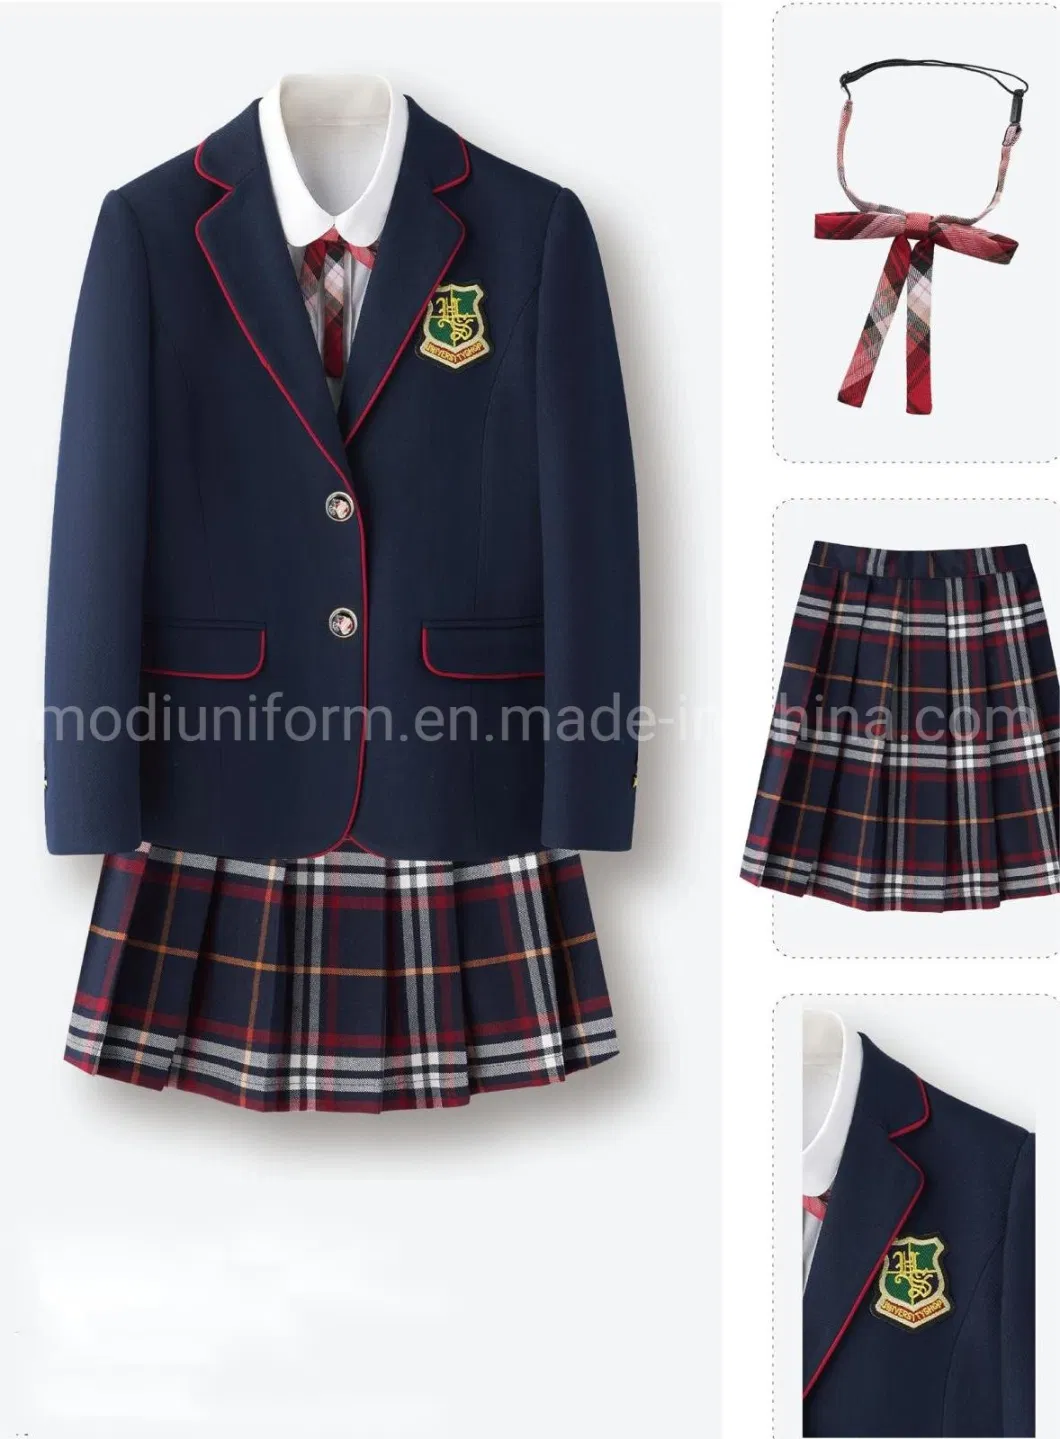 Kindergarten Dress Suit Children Wear Boys and Girls Sports Clothing Education Apparel School Girl Sexy Uniform